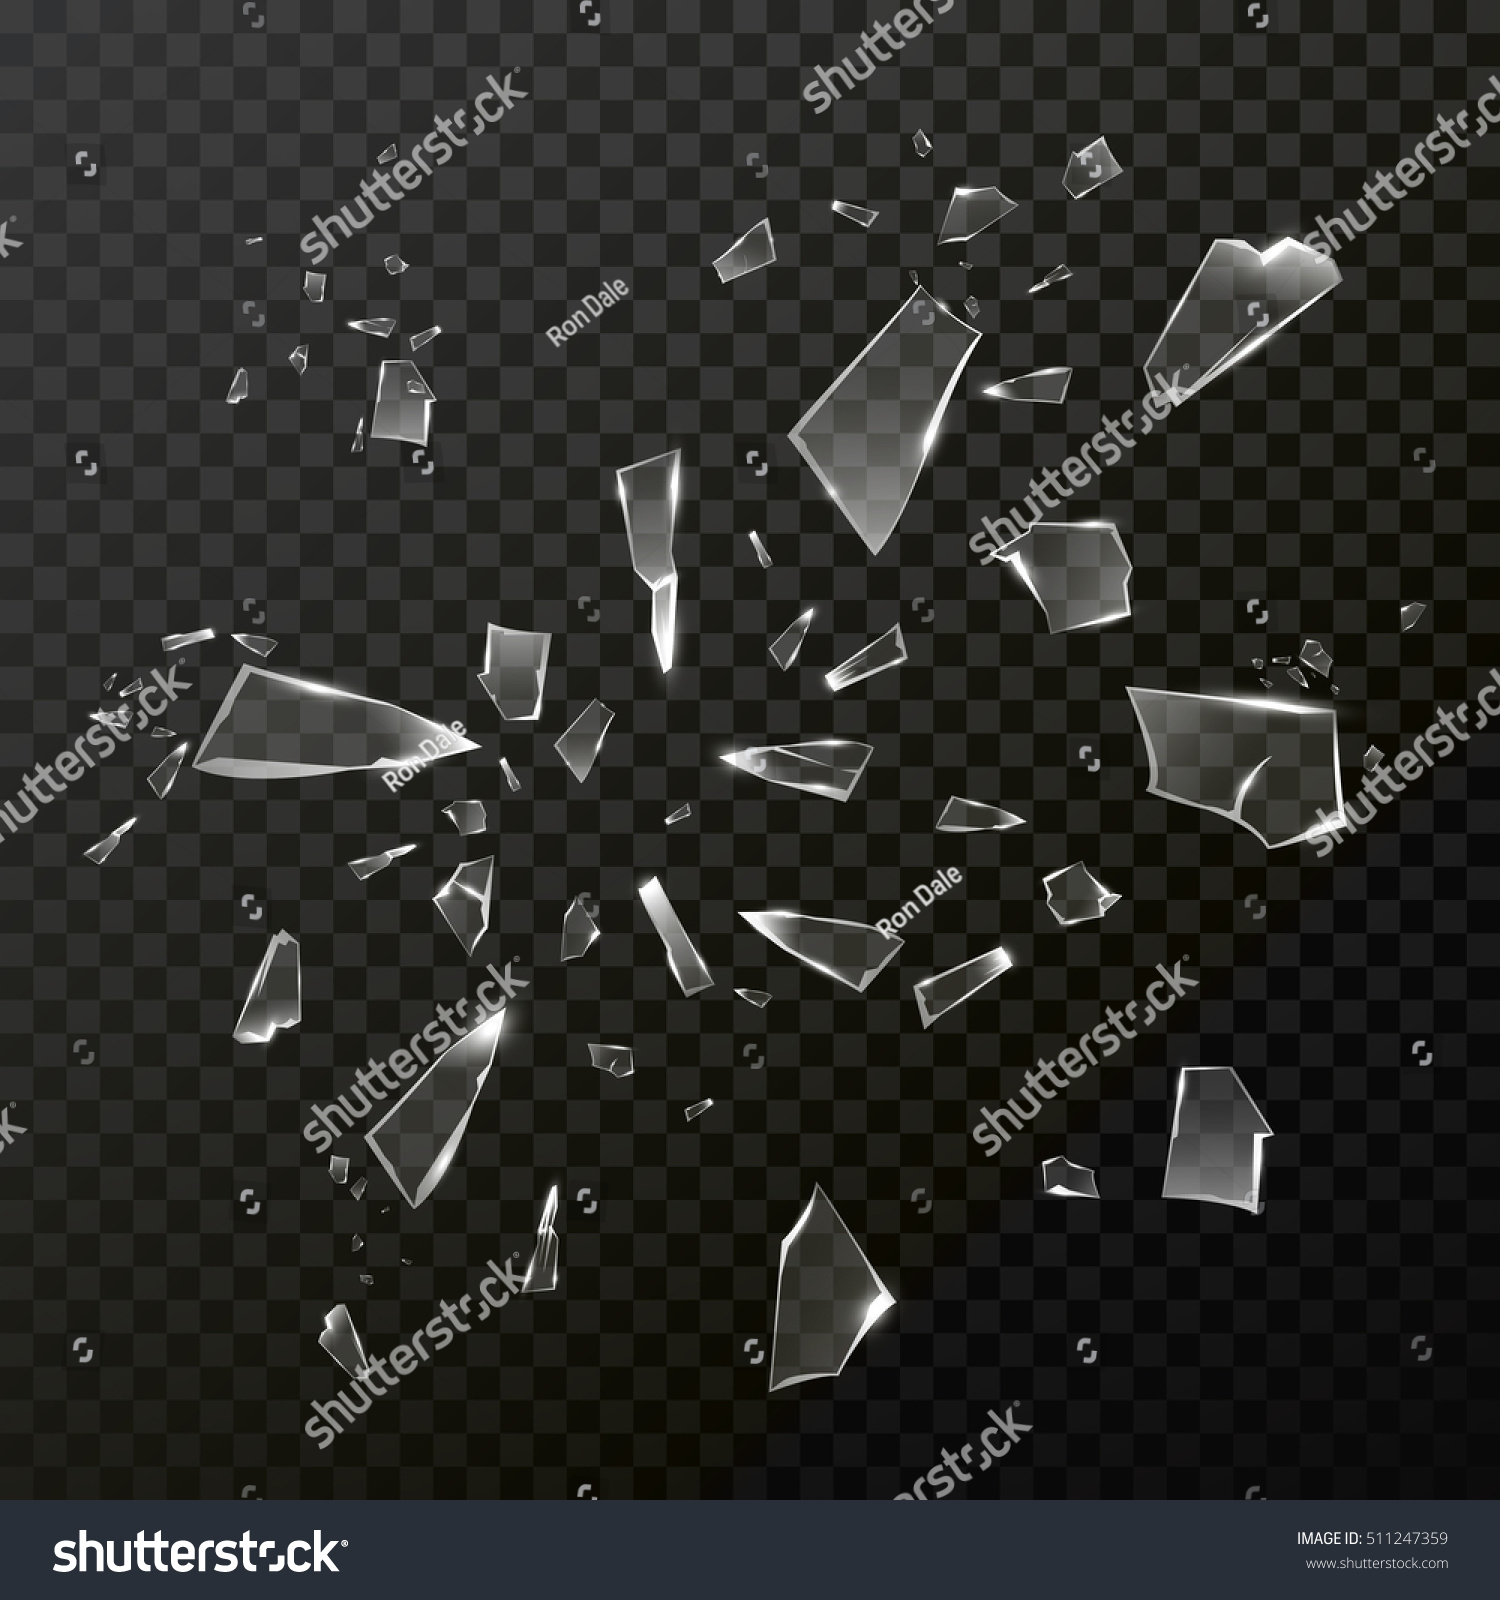 SVG of Broken shattered glass debris. Vector transparent glass crashed into pieces smithers. Cracked shatter mirror glass on black background. svg